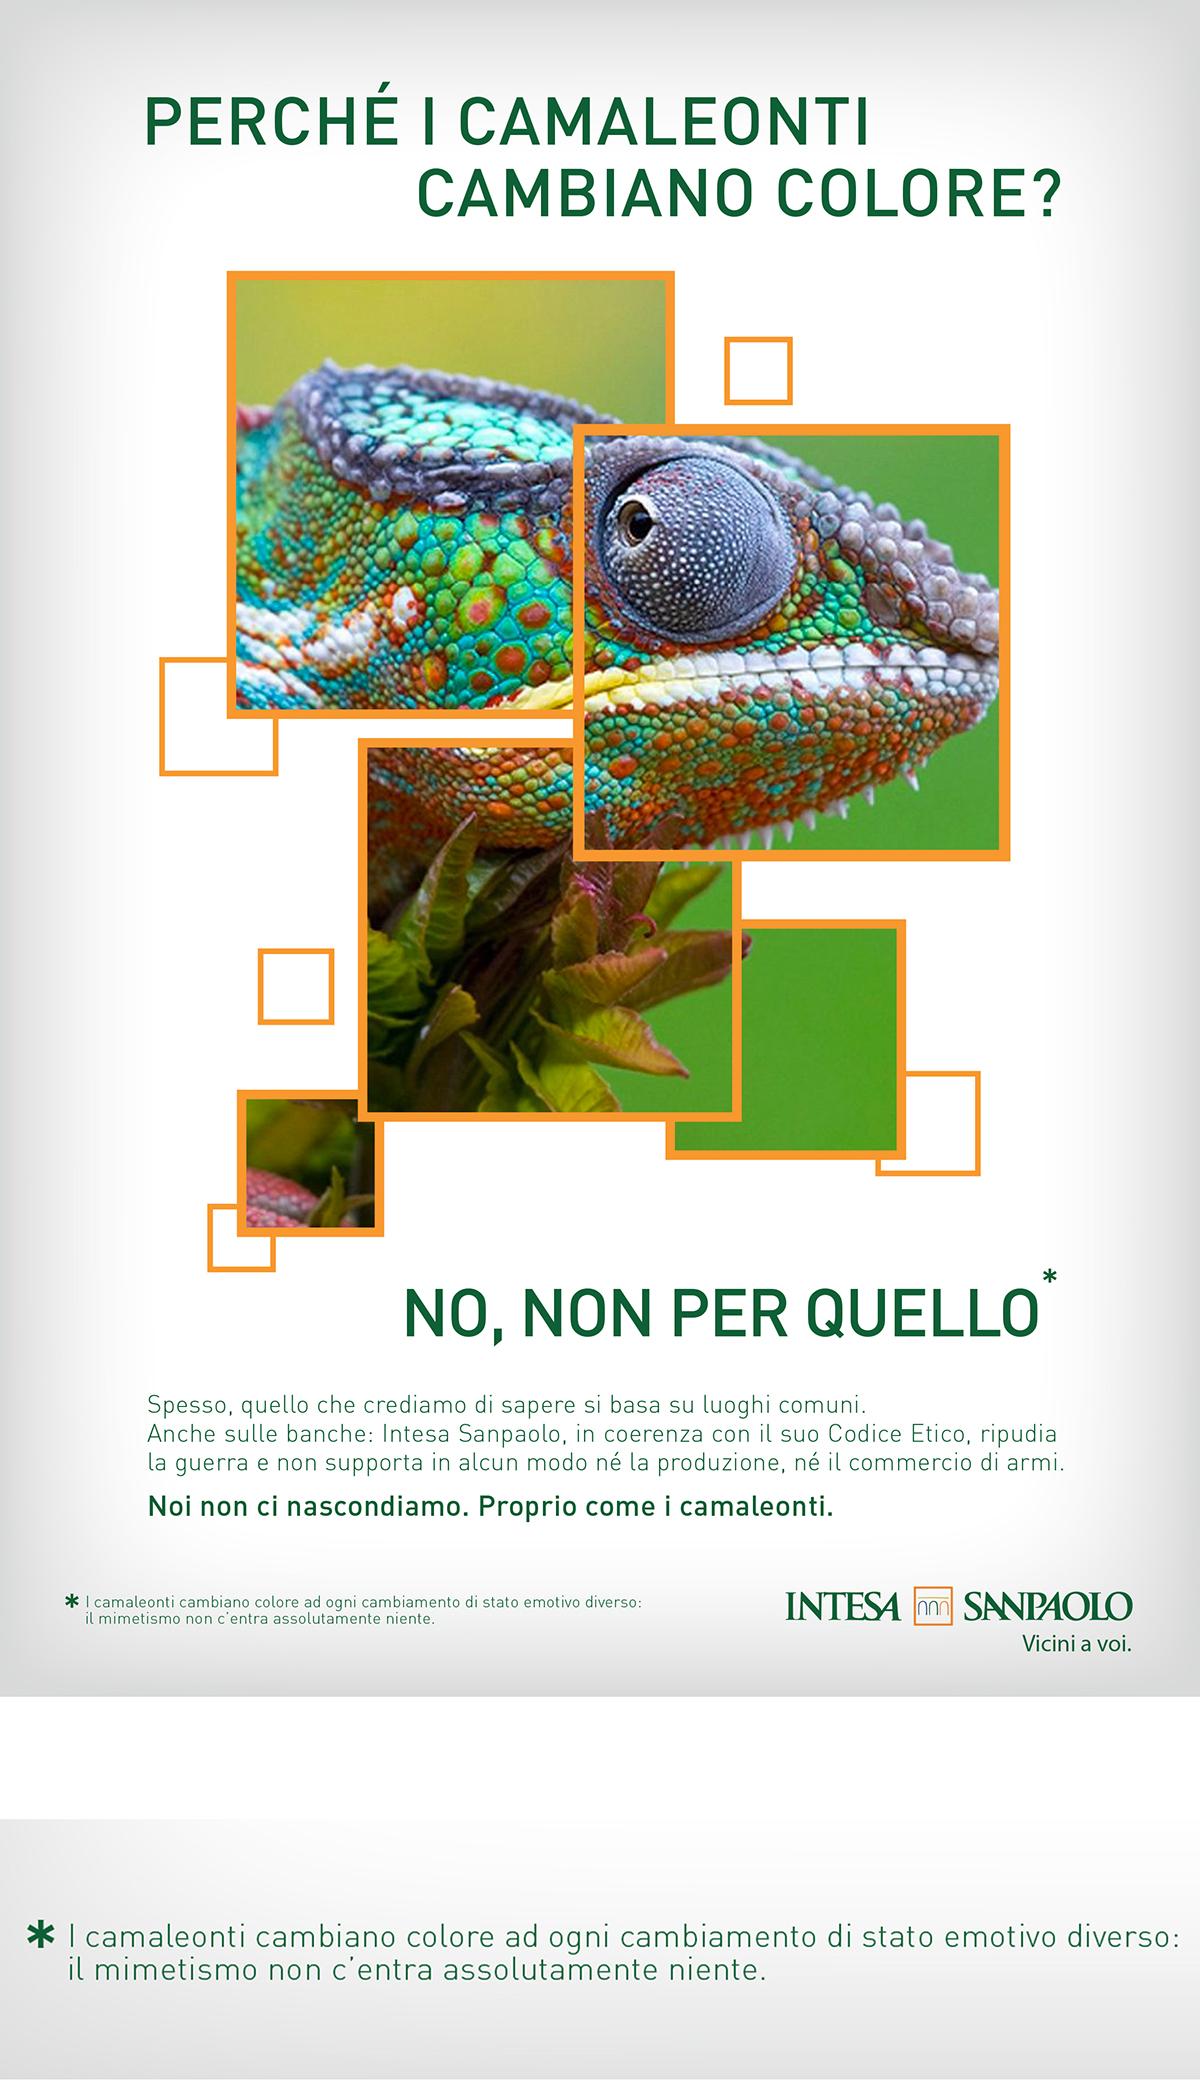 Bank Italy intesa sanpaolo animals Facts graphic design cammelli diritti cenerentola